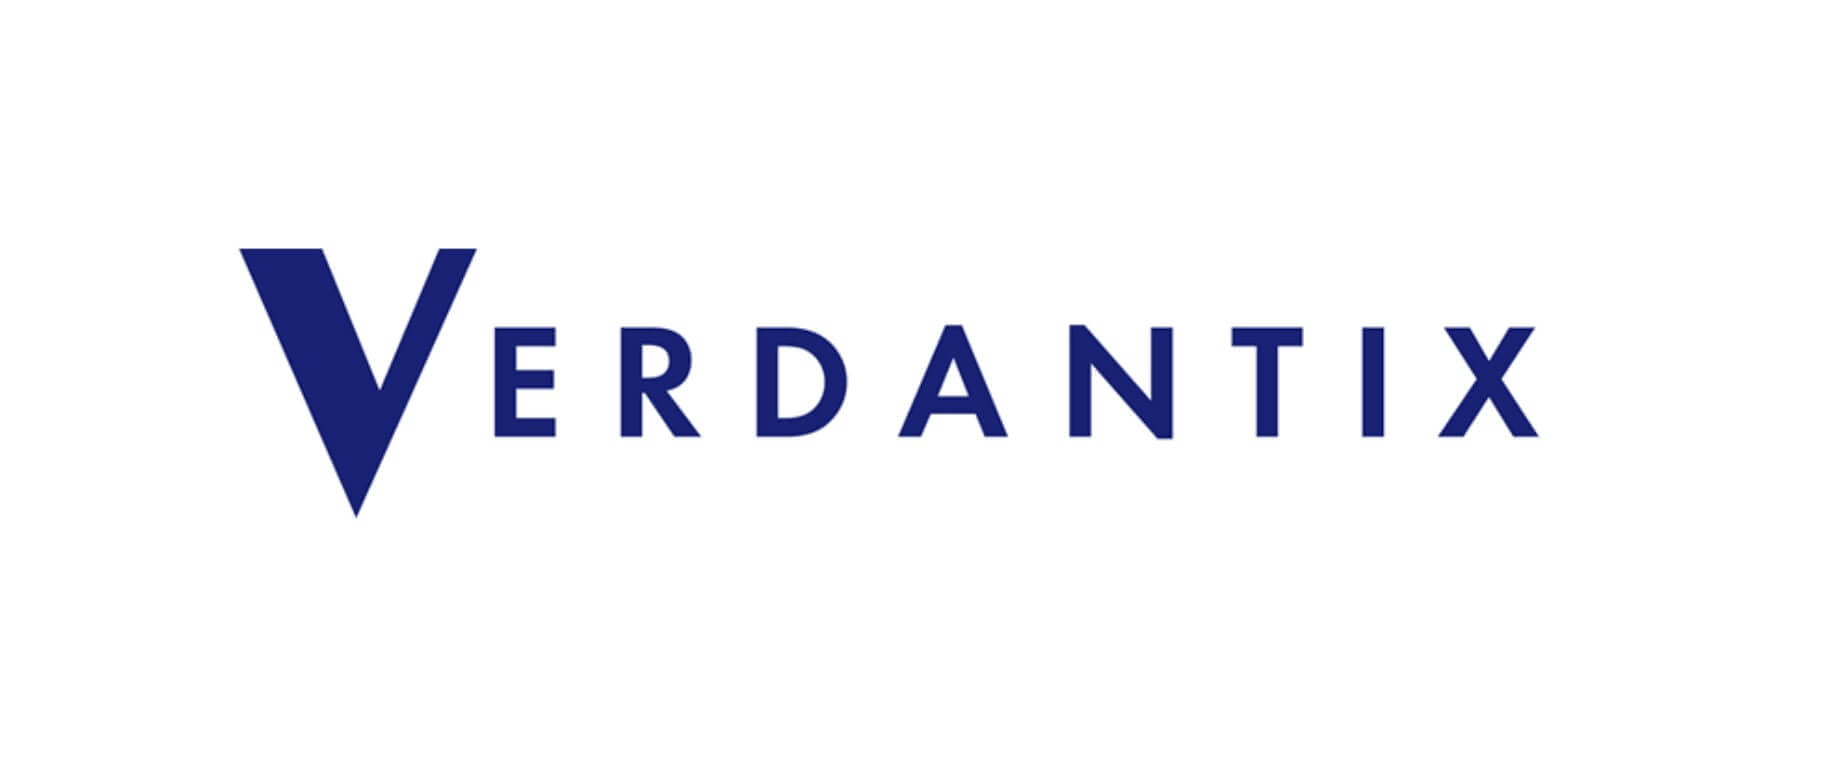 verdantix logo